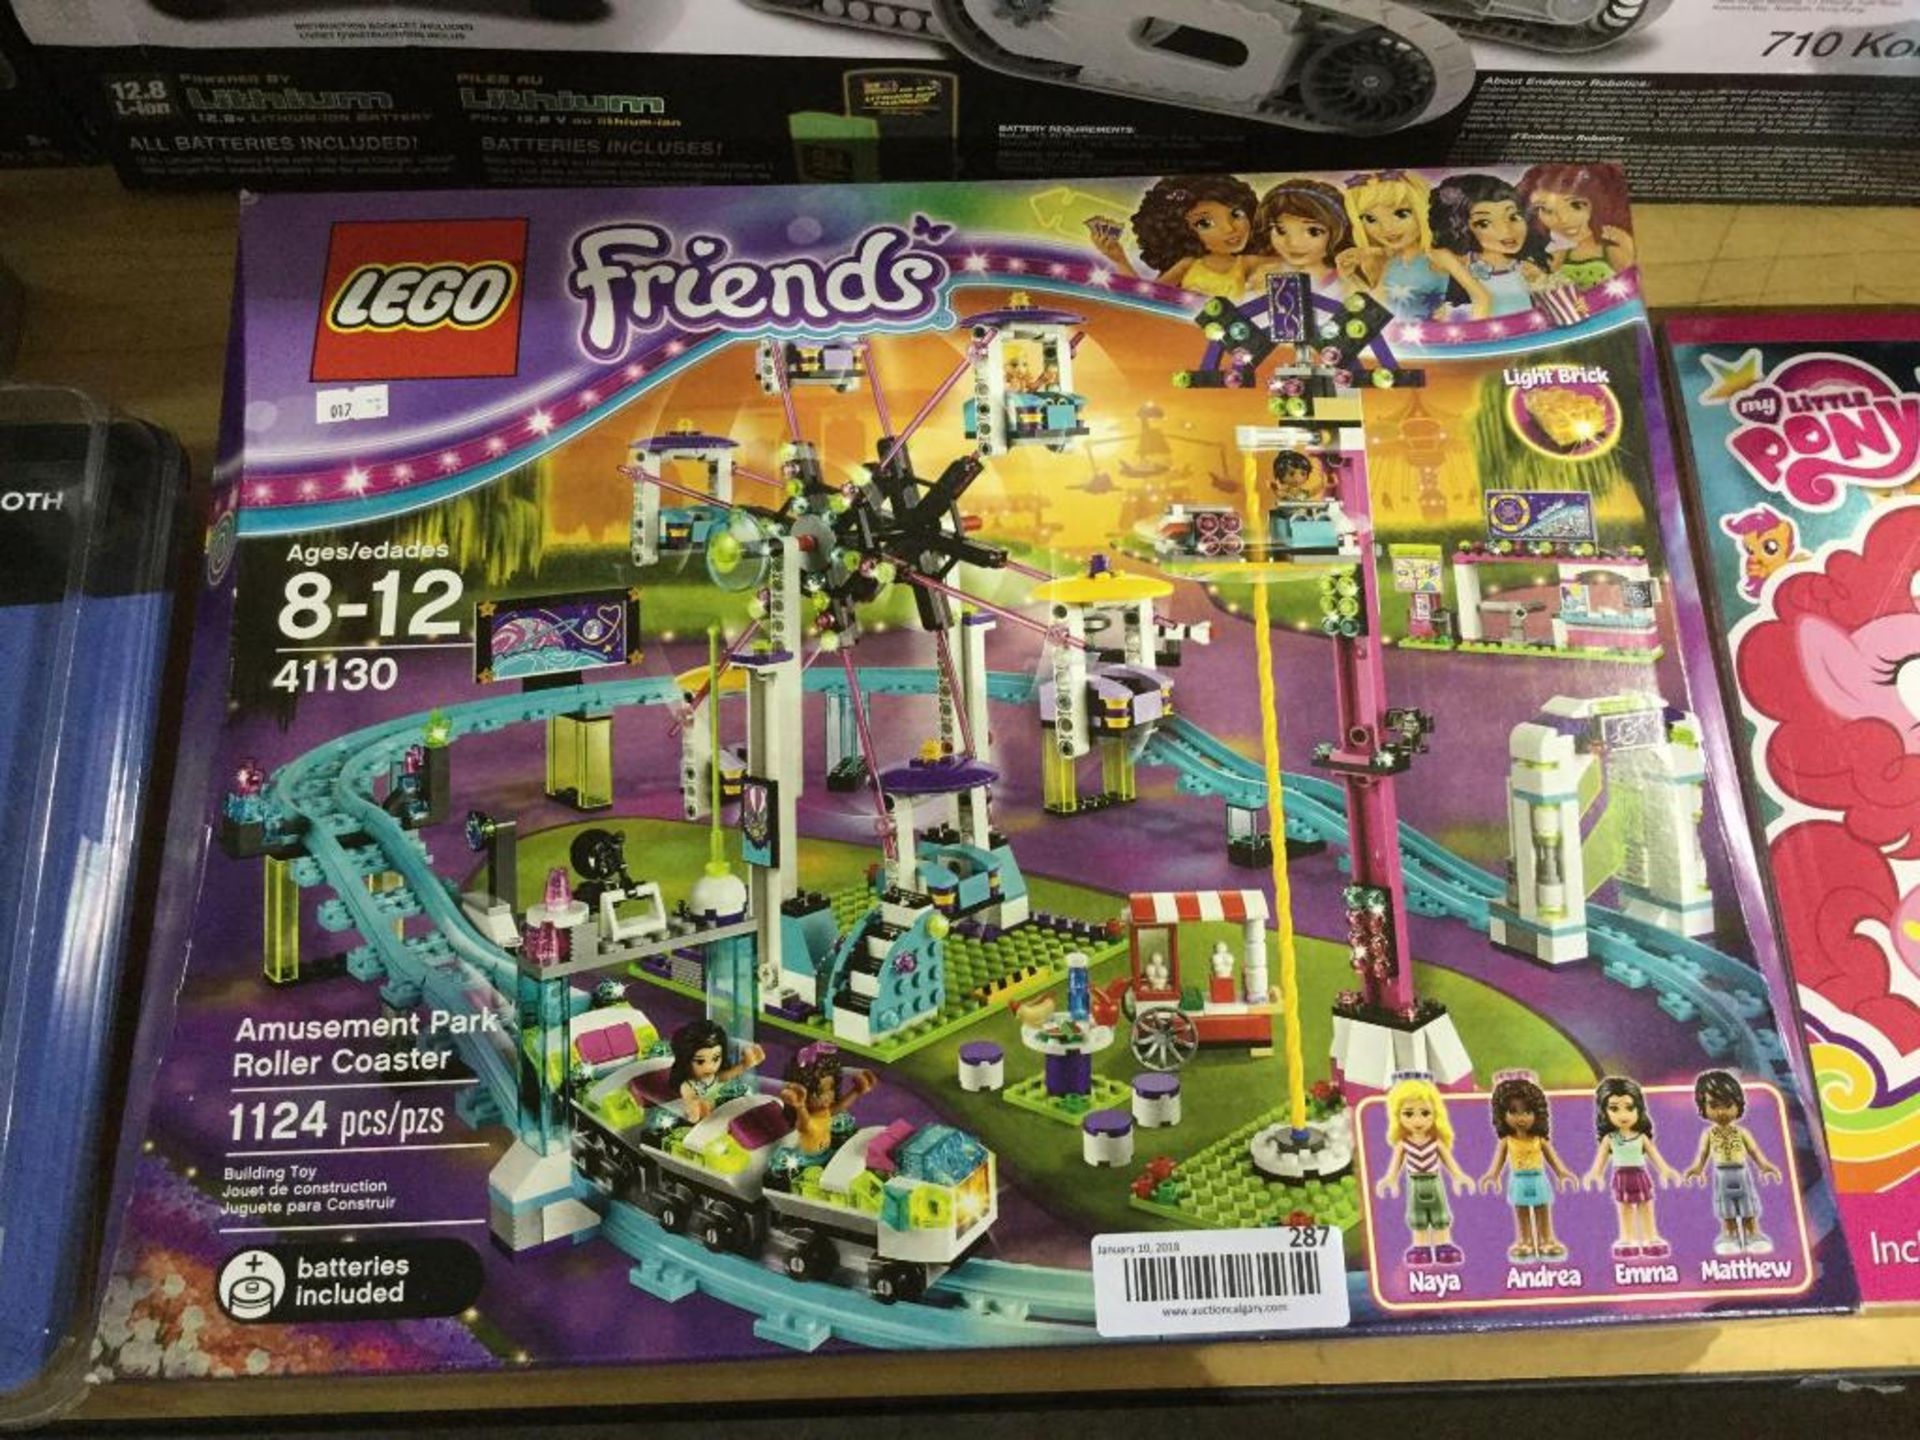 Lego Friends - 1124 Piece Amusement Park Roller Coaster